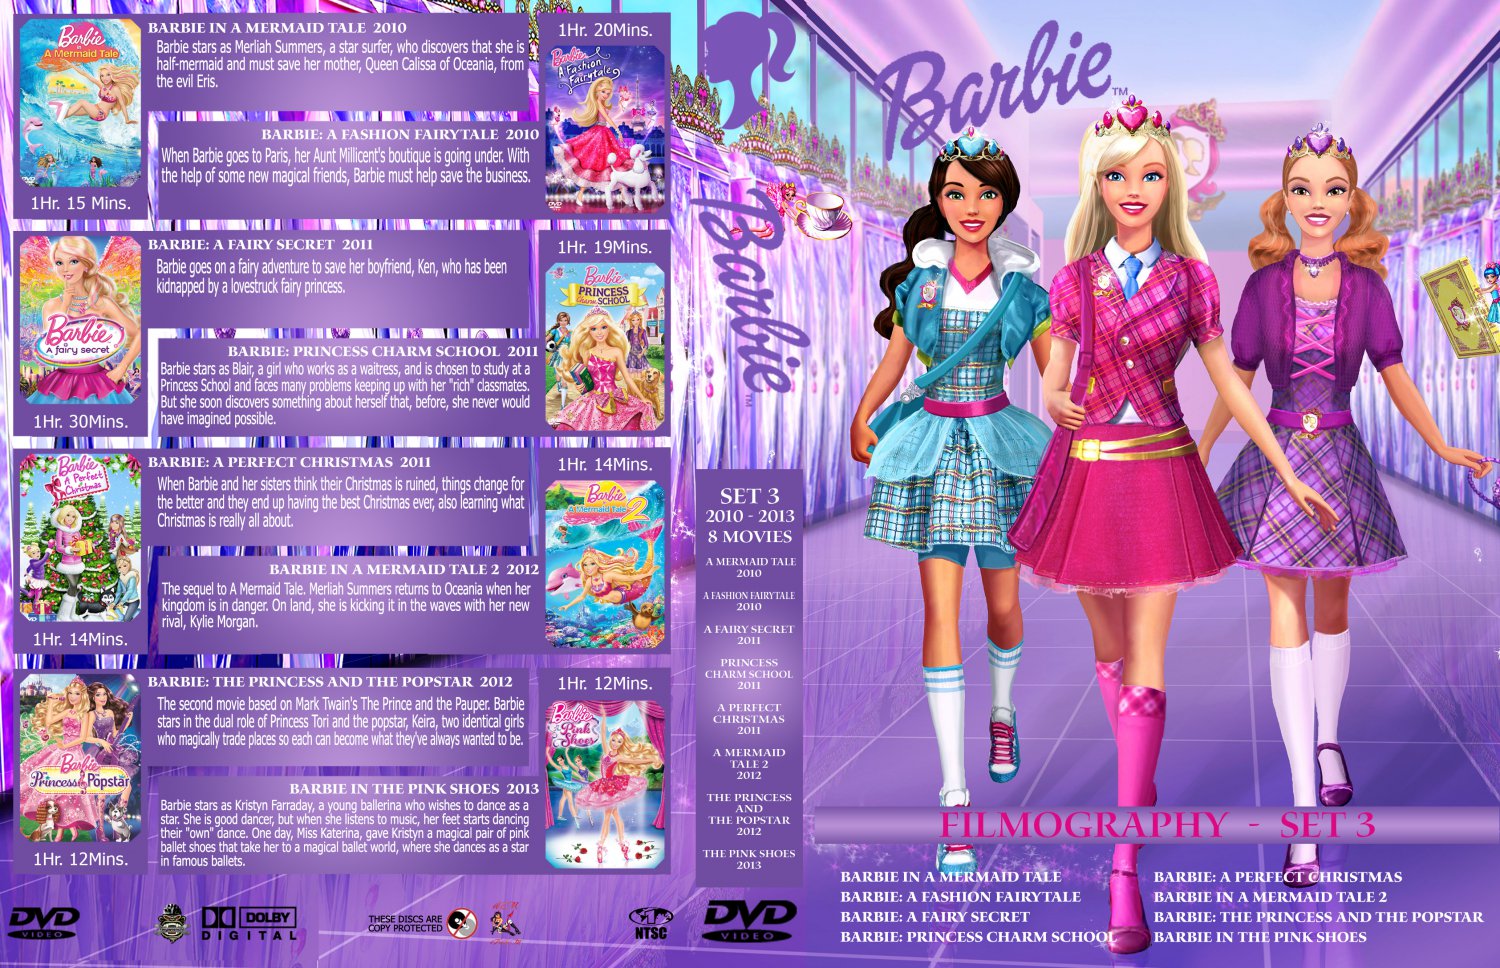 Barbie_Collection_Set_3_3370_x_2175